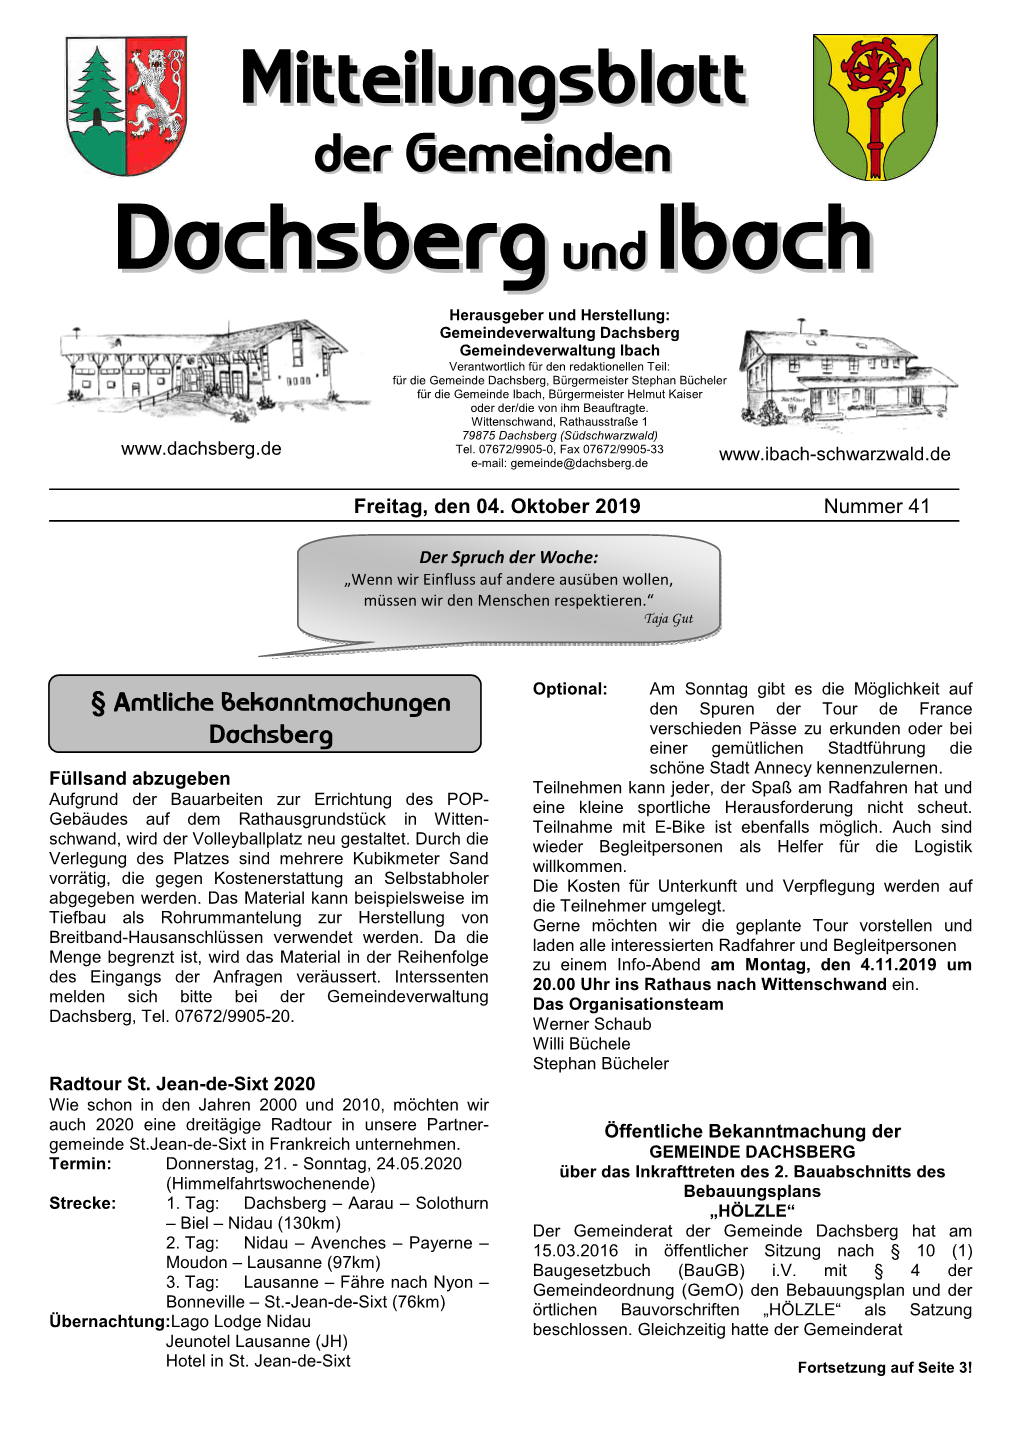 Dachsberg Undibach